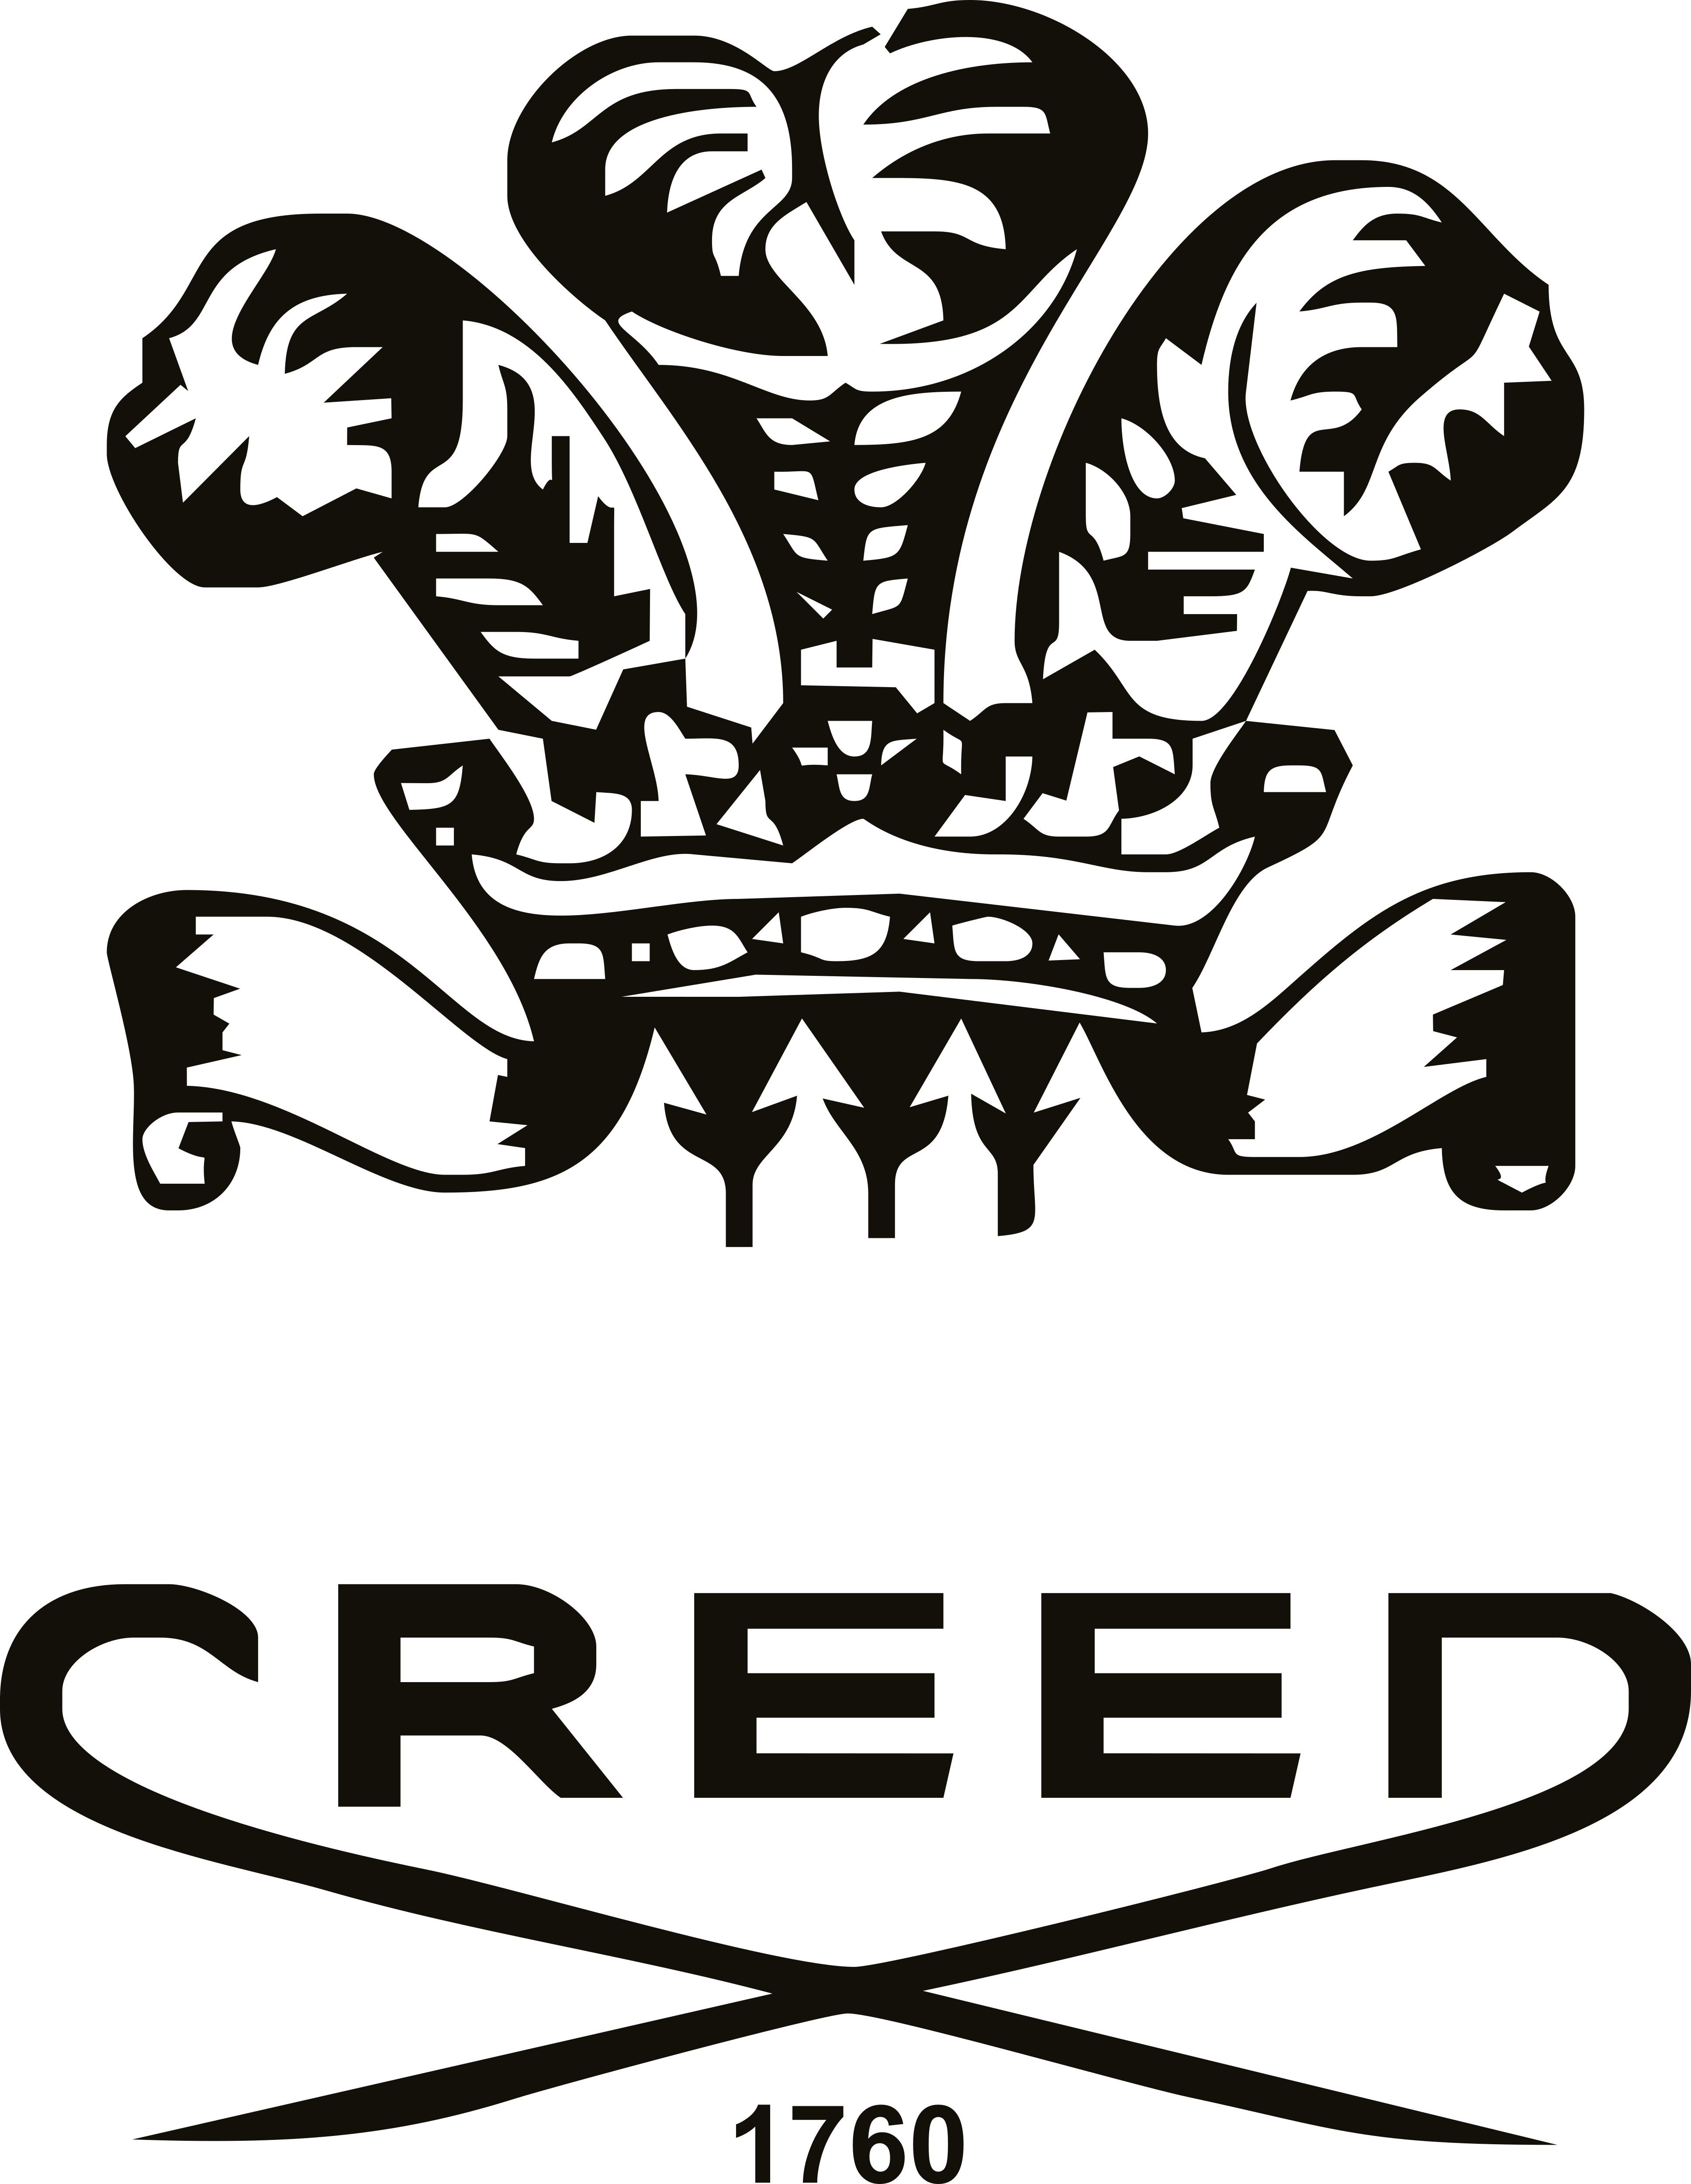 Creed 1760 – Logos Download